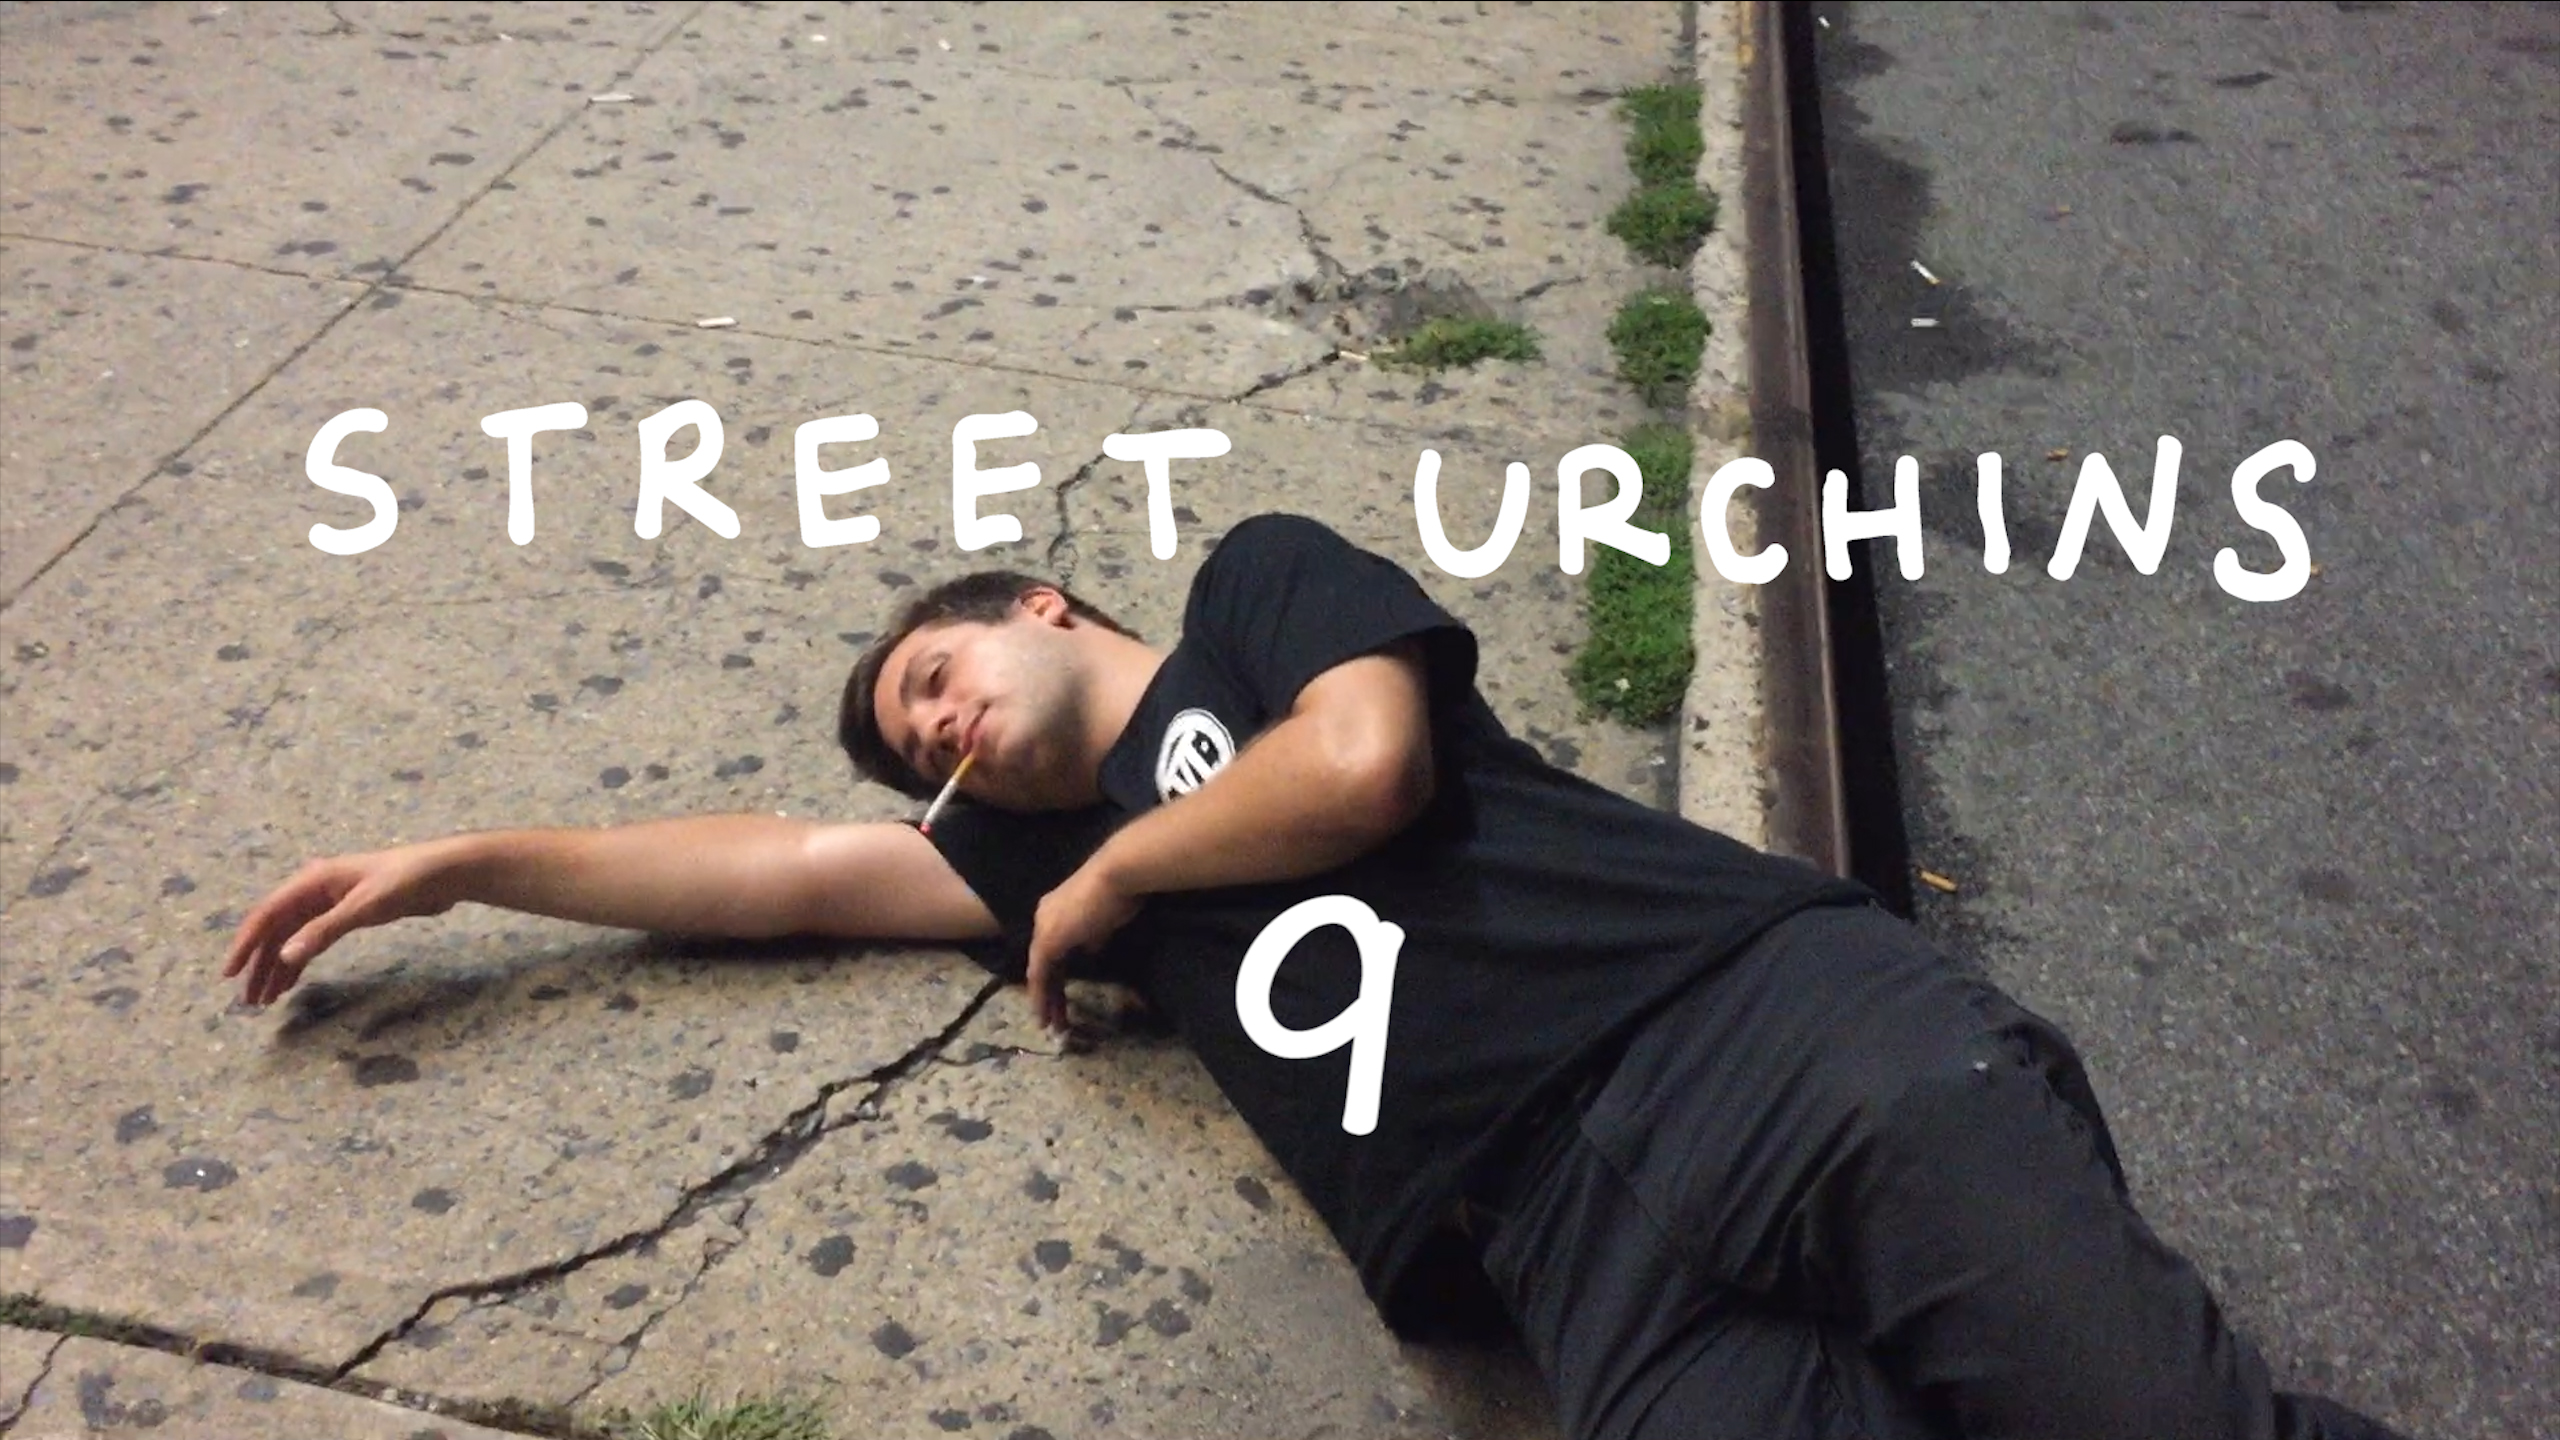 FULL VIDEO: Street Urchins 9 (2016)